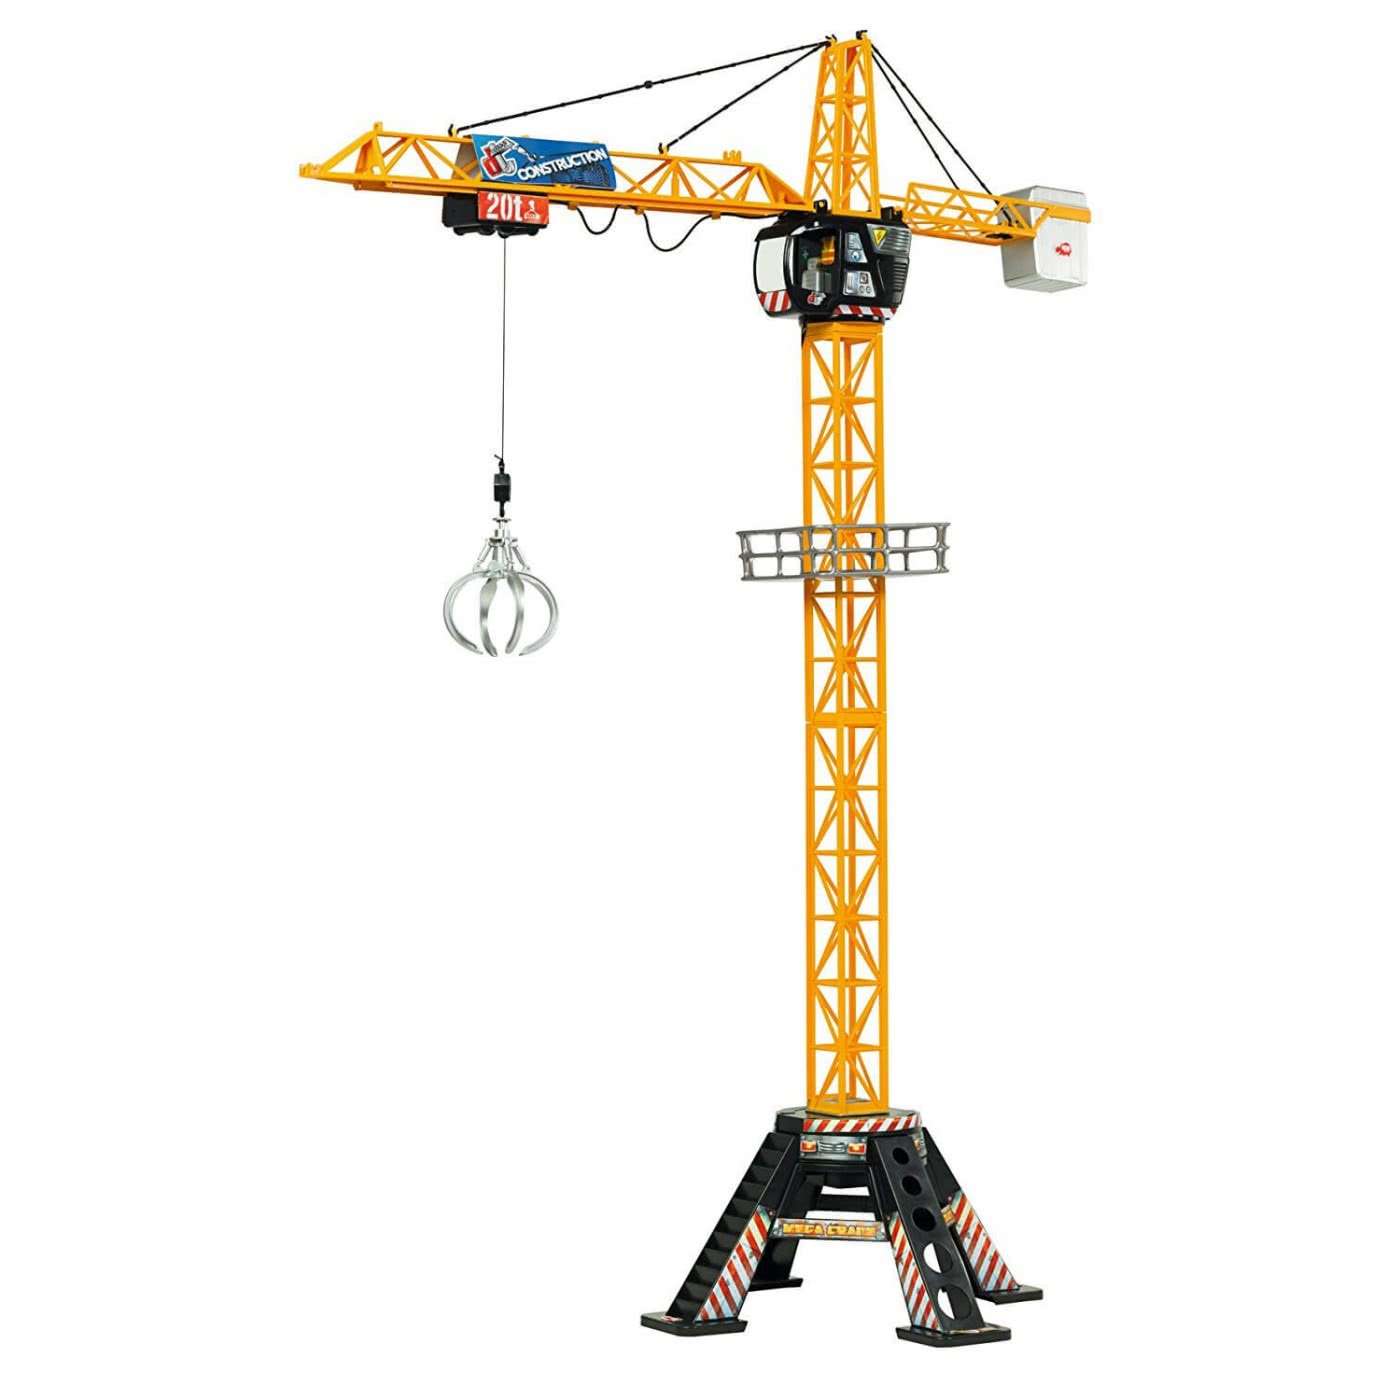  Jucarie - Mega Crane 120cm | Dickie Toys 